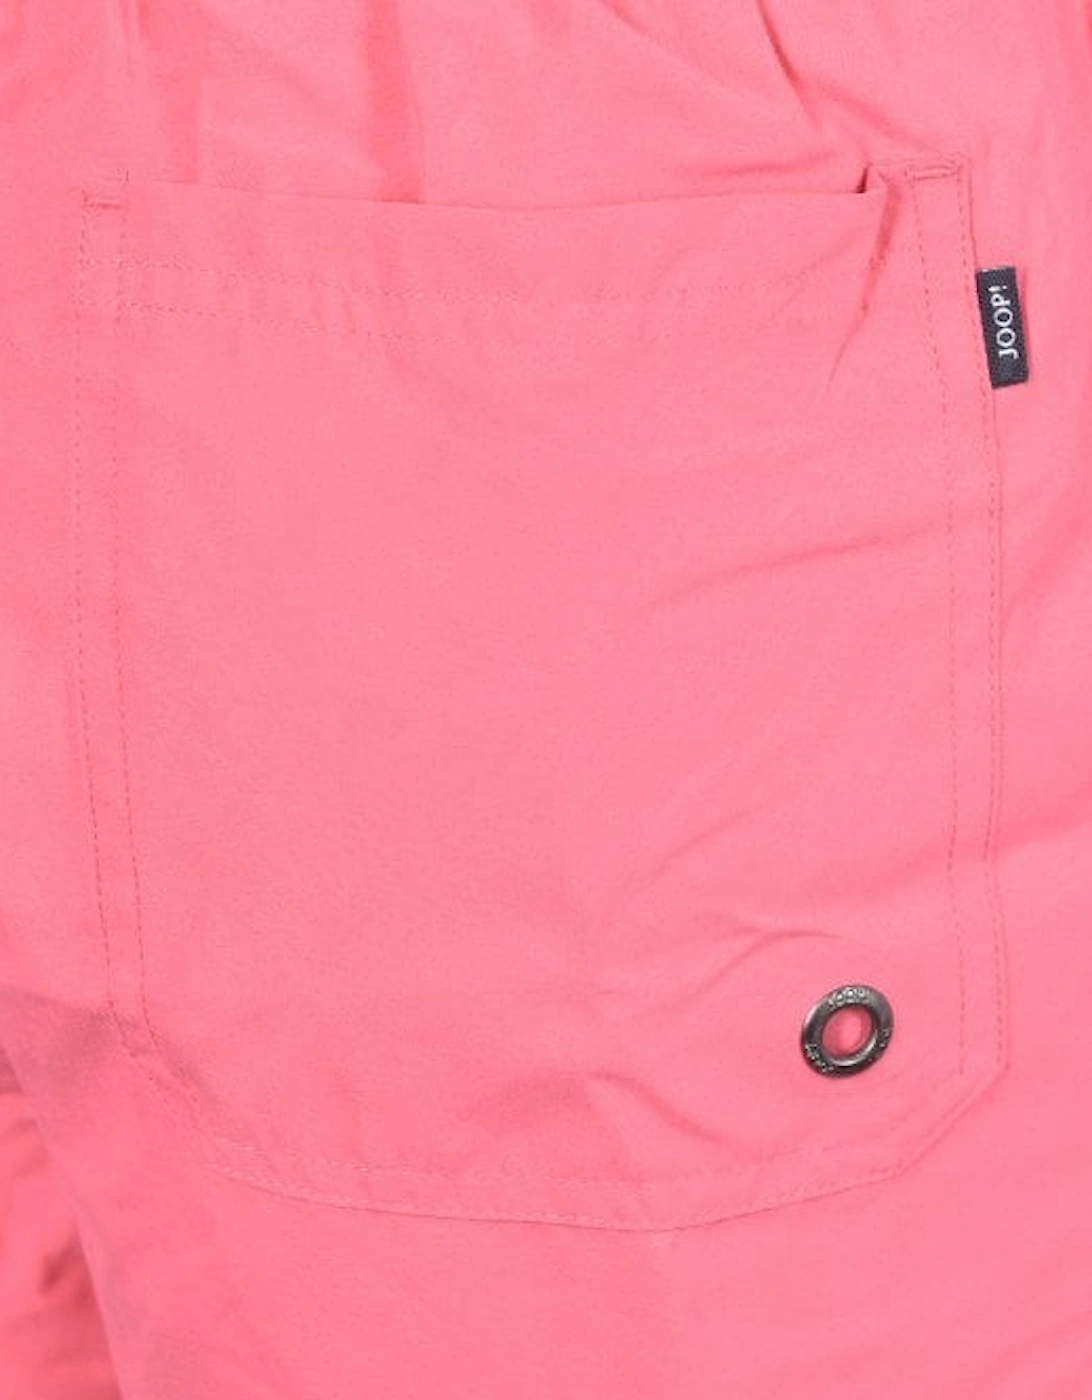 Jeans South Beach Swim Shorts, Soft Pink